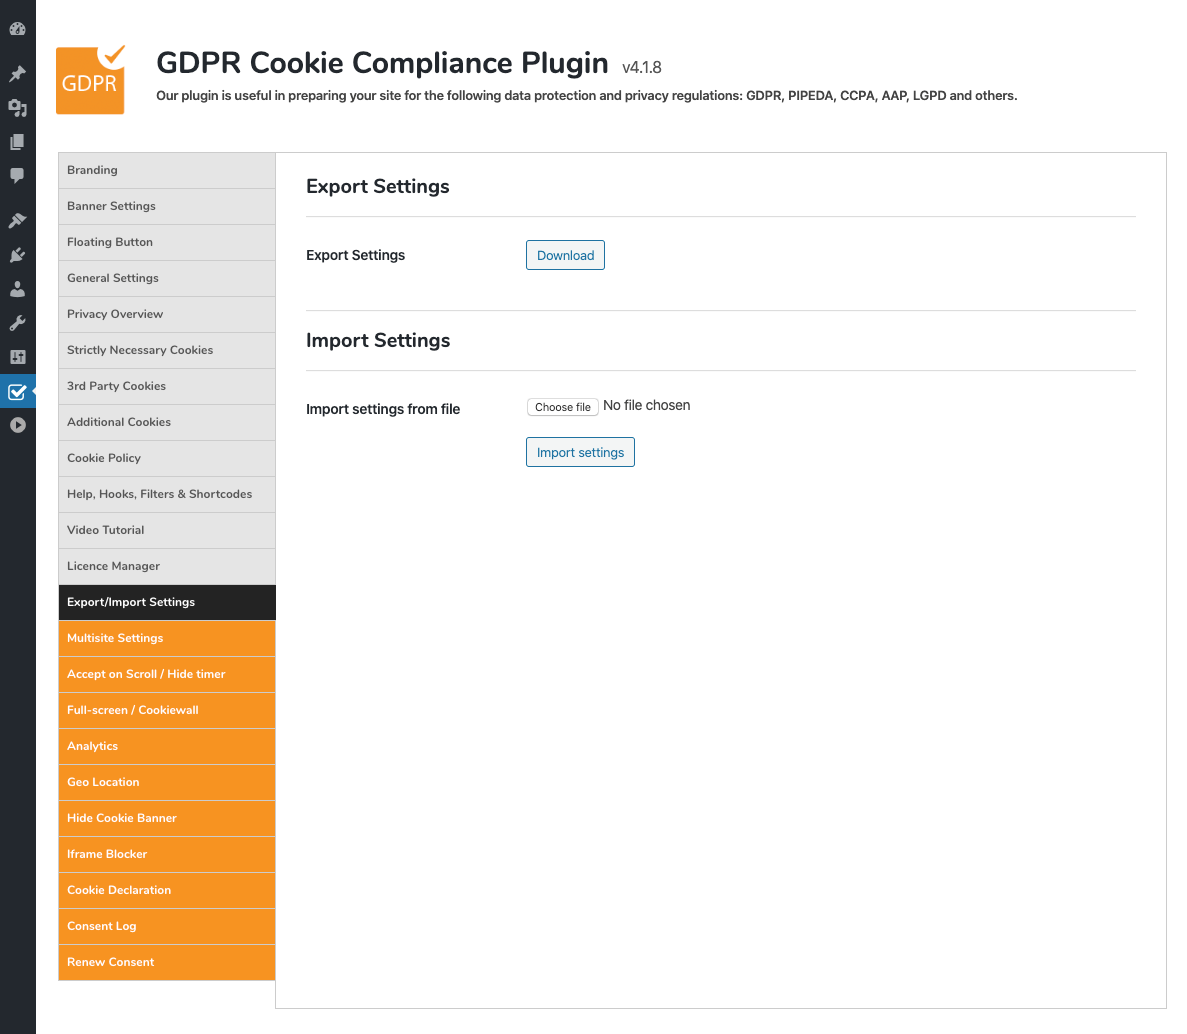 GDPR Cookie Compliance - Admin - Export/Import Settings [Premium]